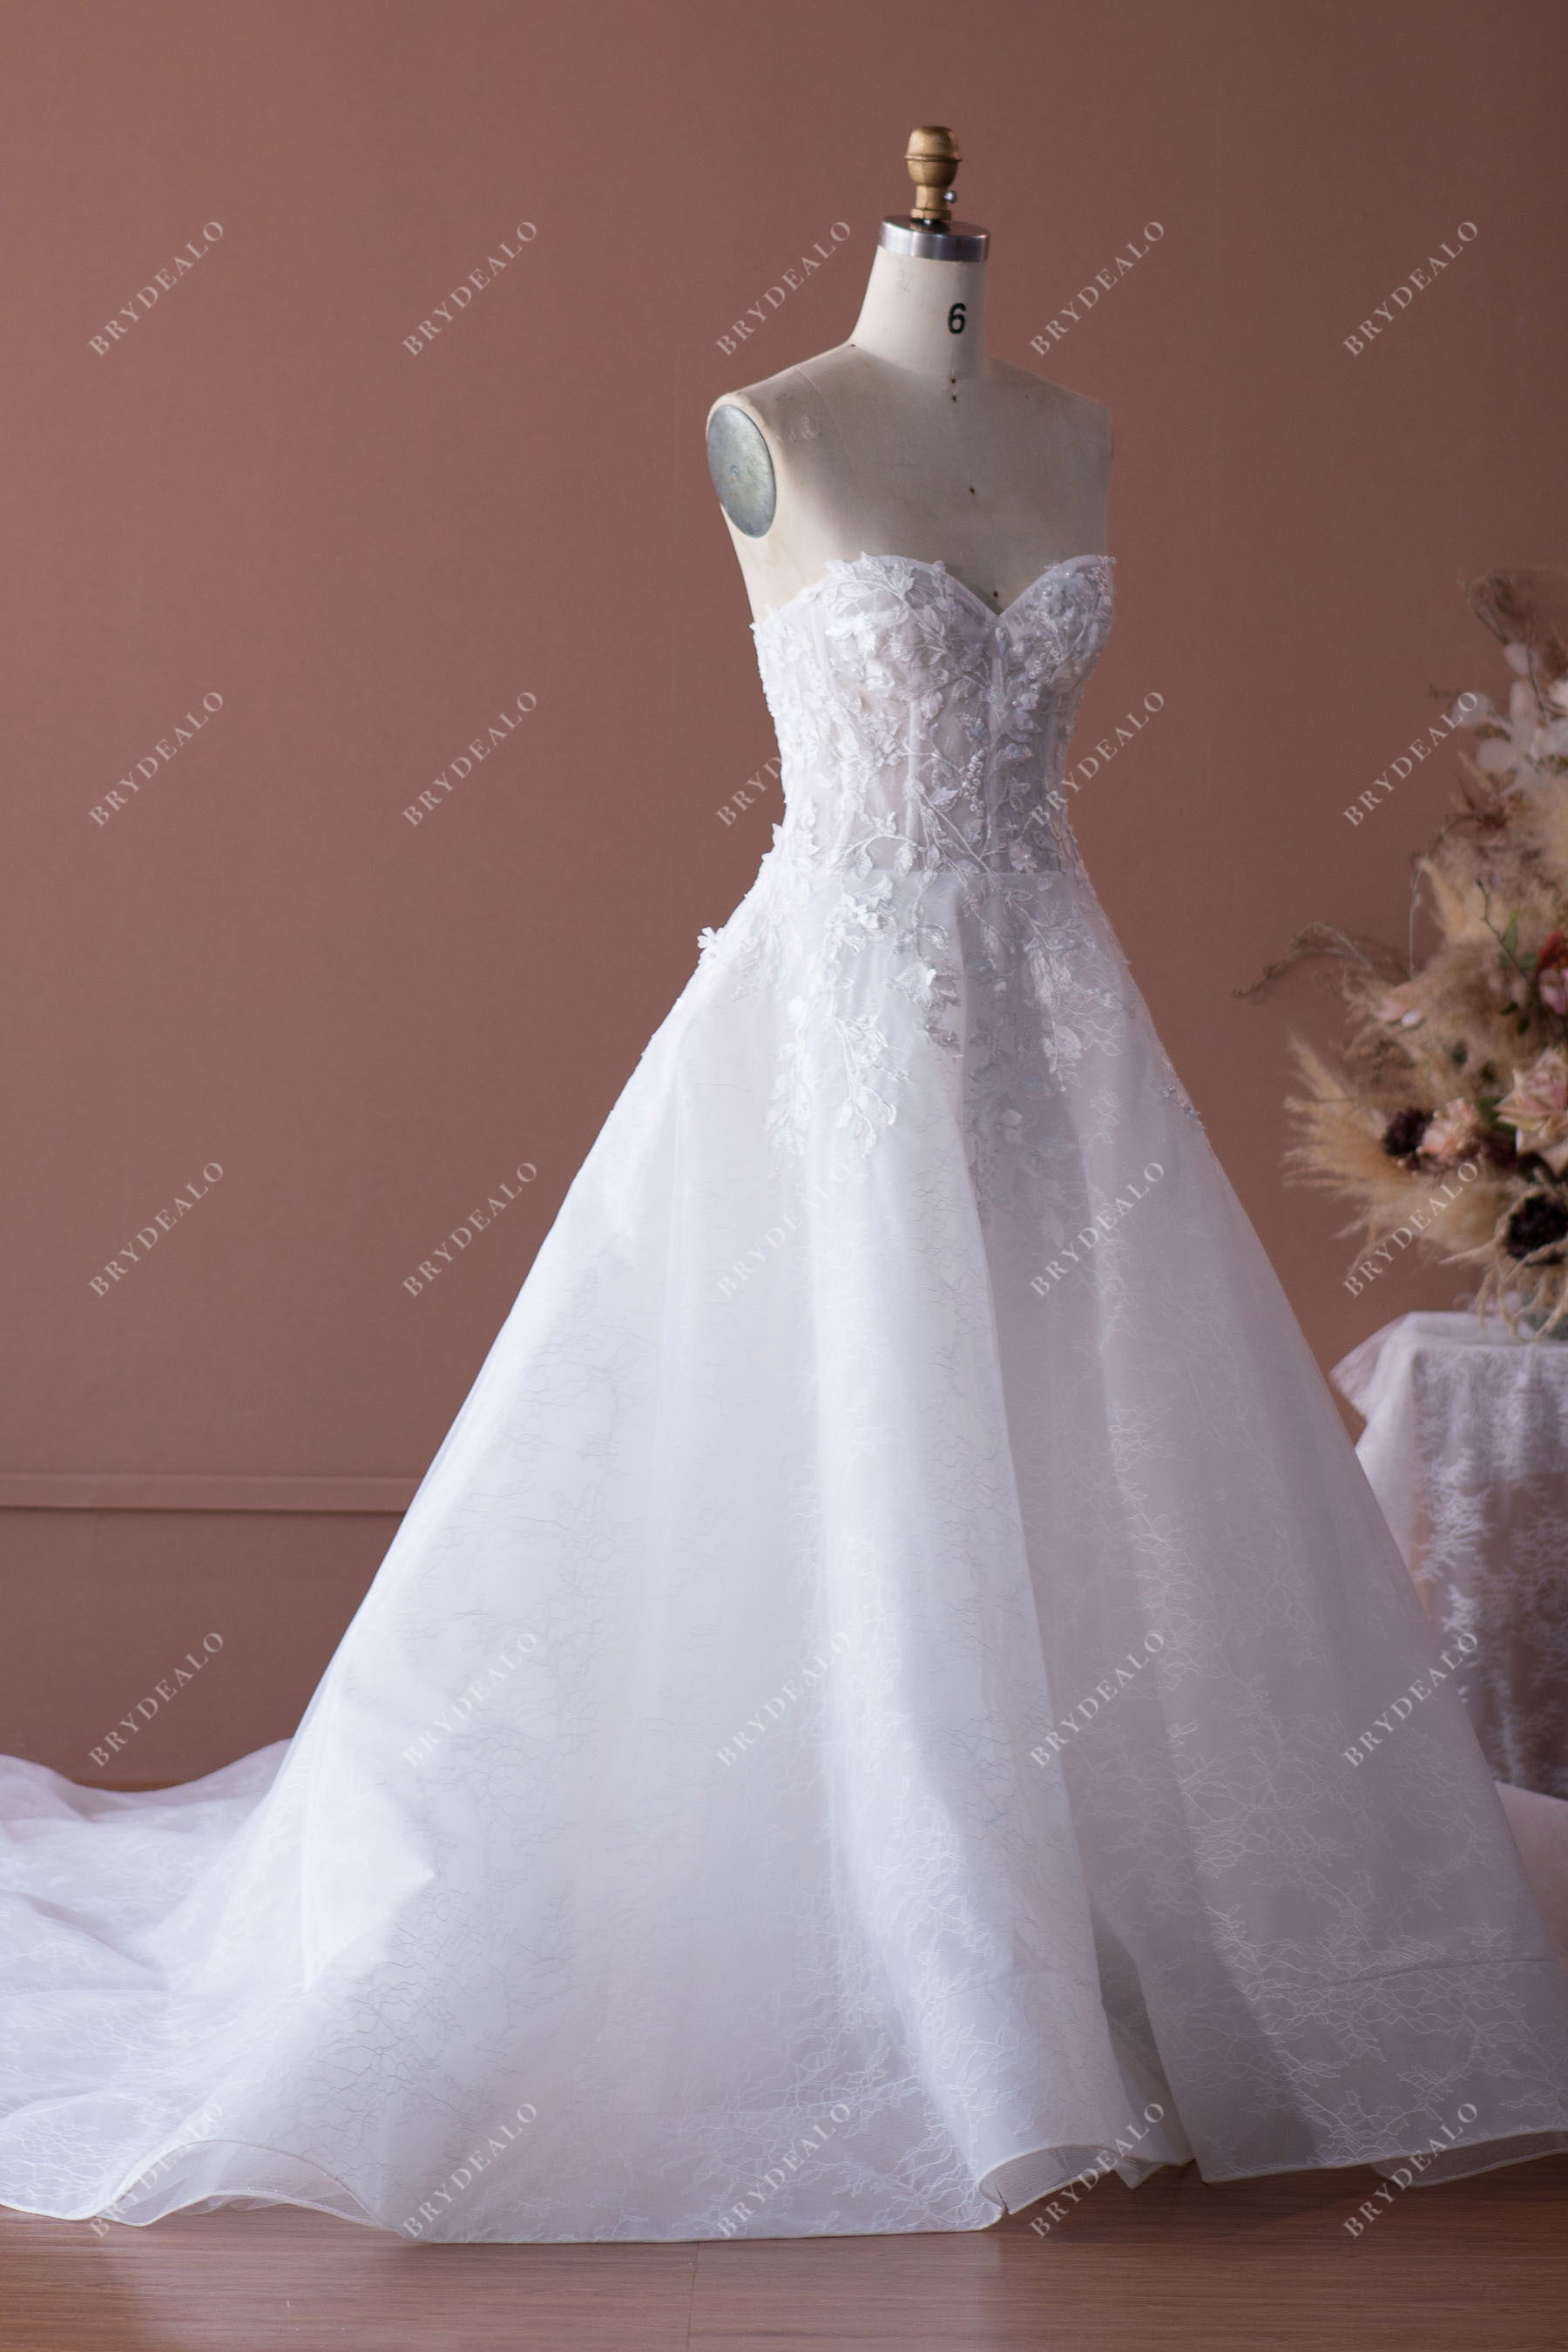 Strapless Sweetheart Corset Lace Ballgown Wedding Dress